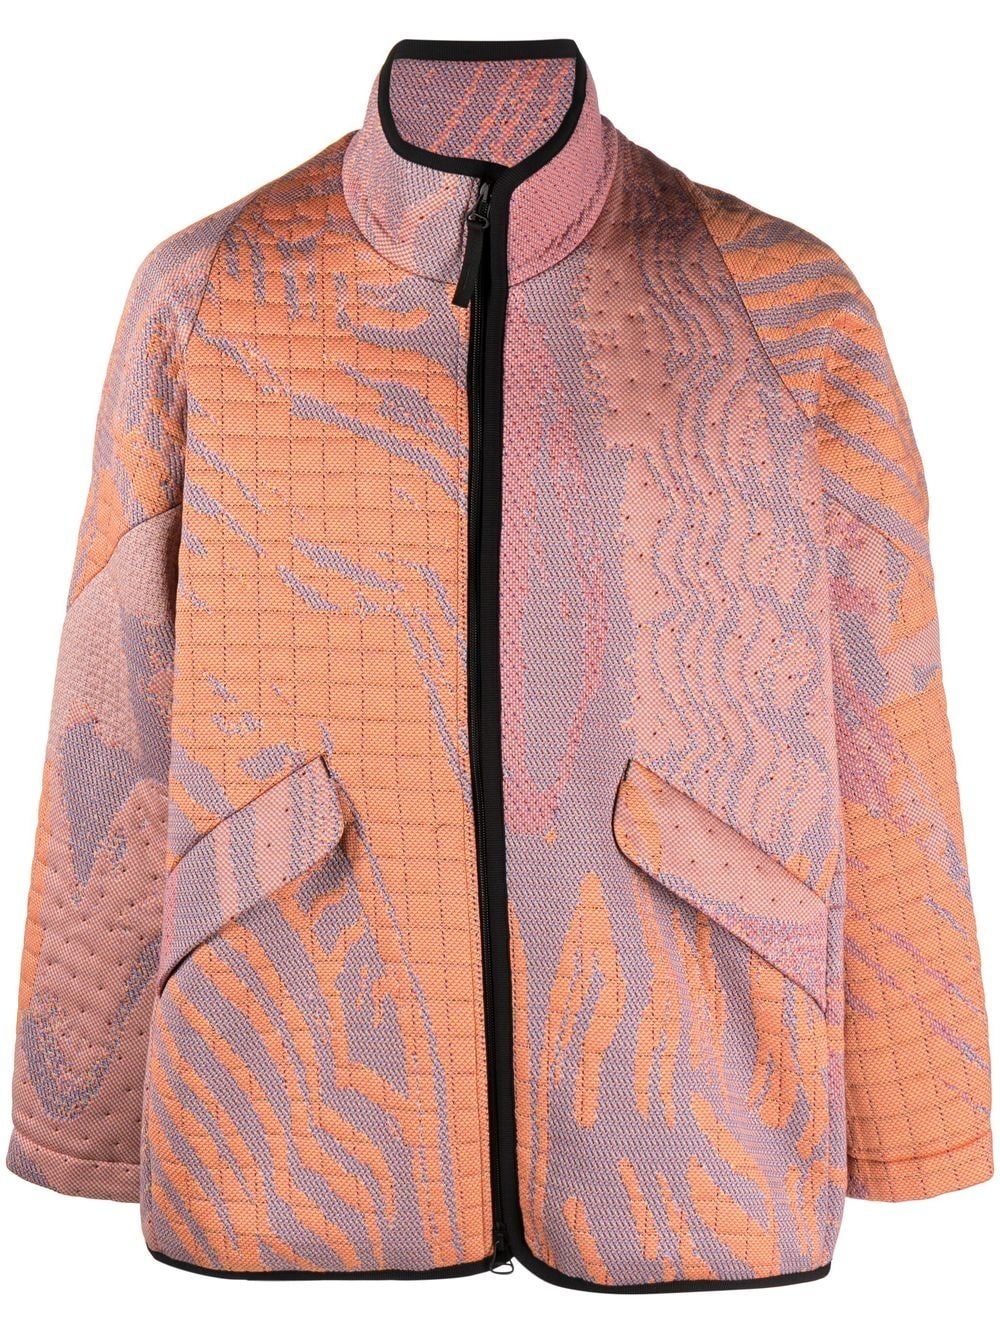 BYBORRE jacquard-pattern zip-up jacket - Orange